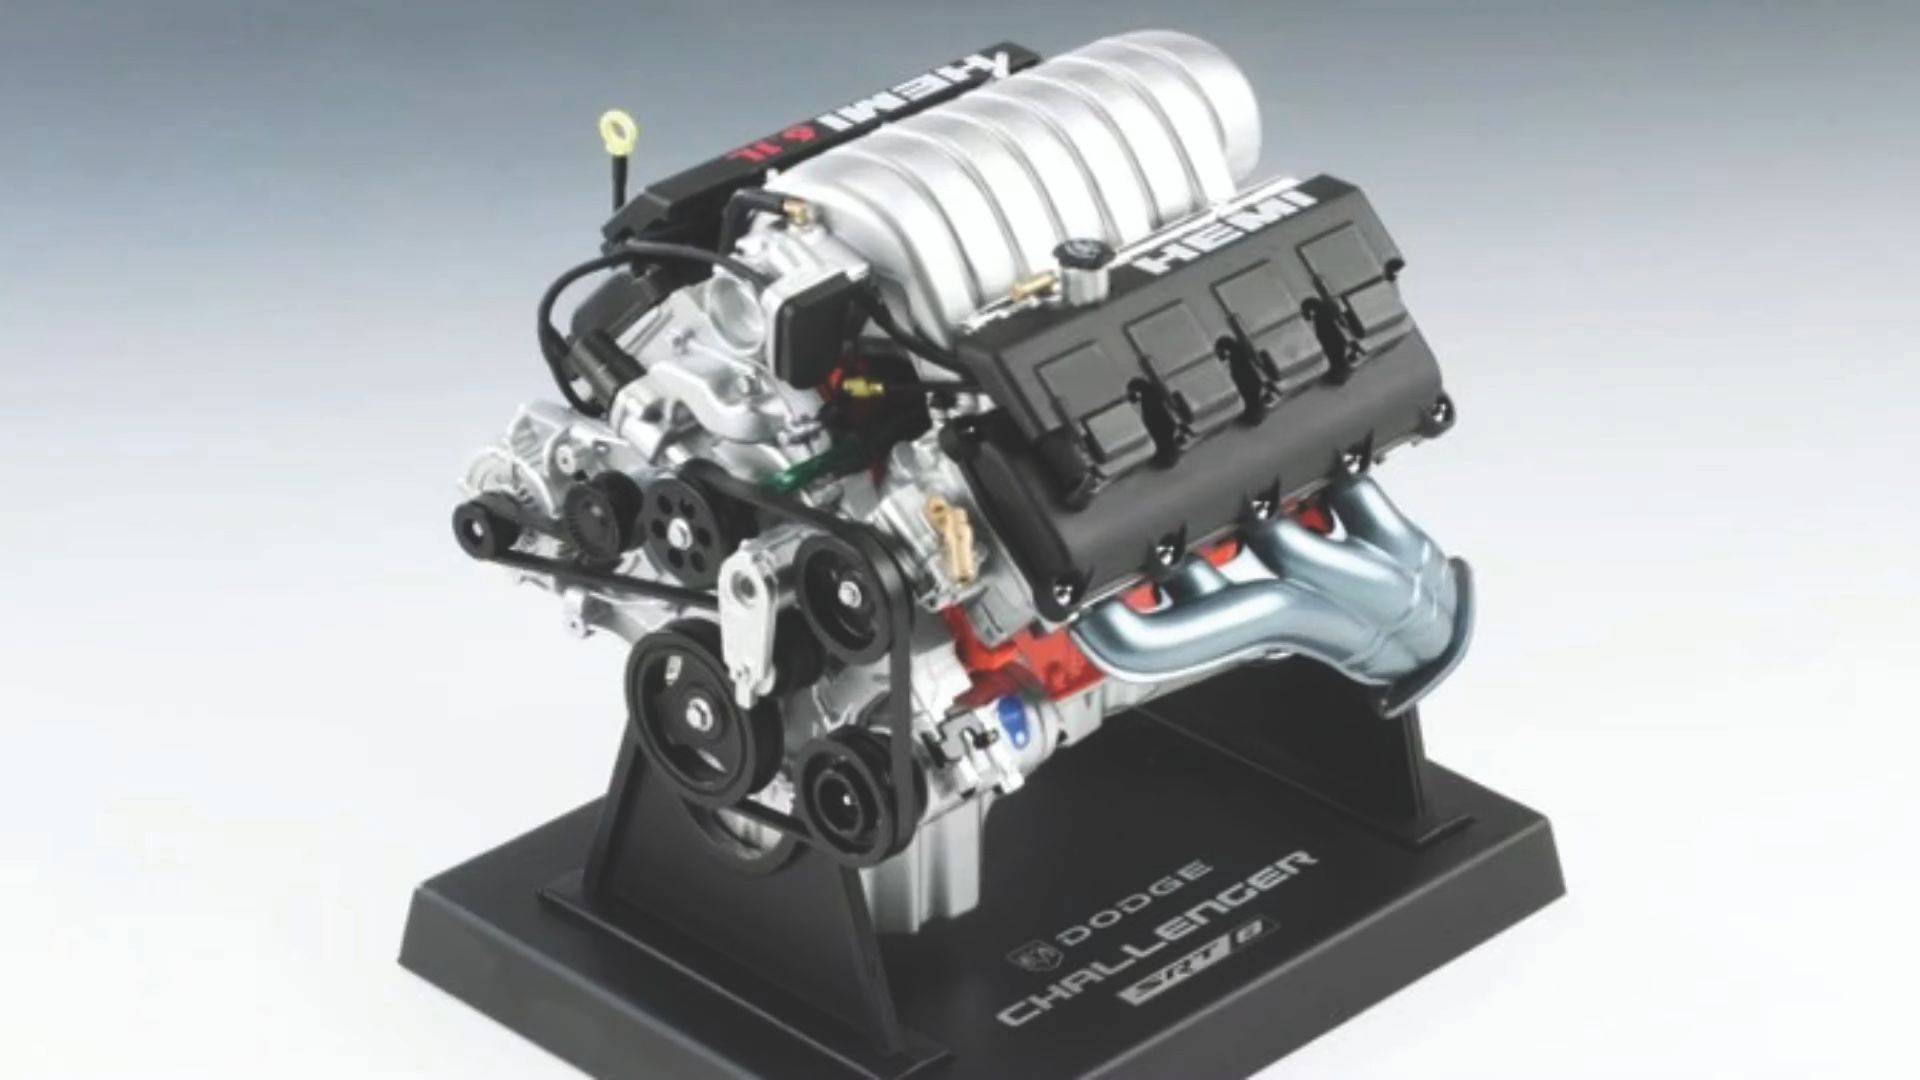 Hemi Engine from Dodge Challenger